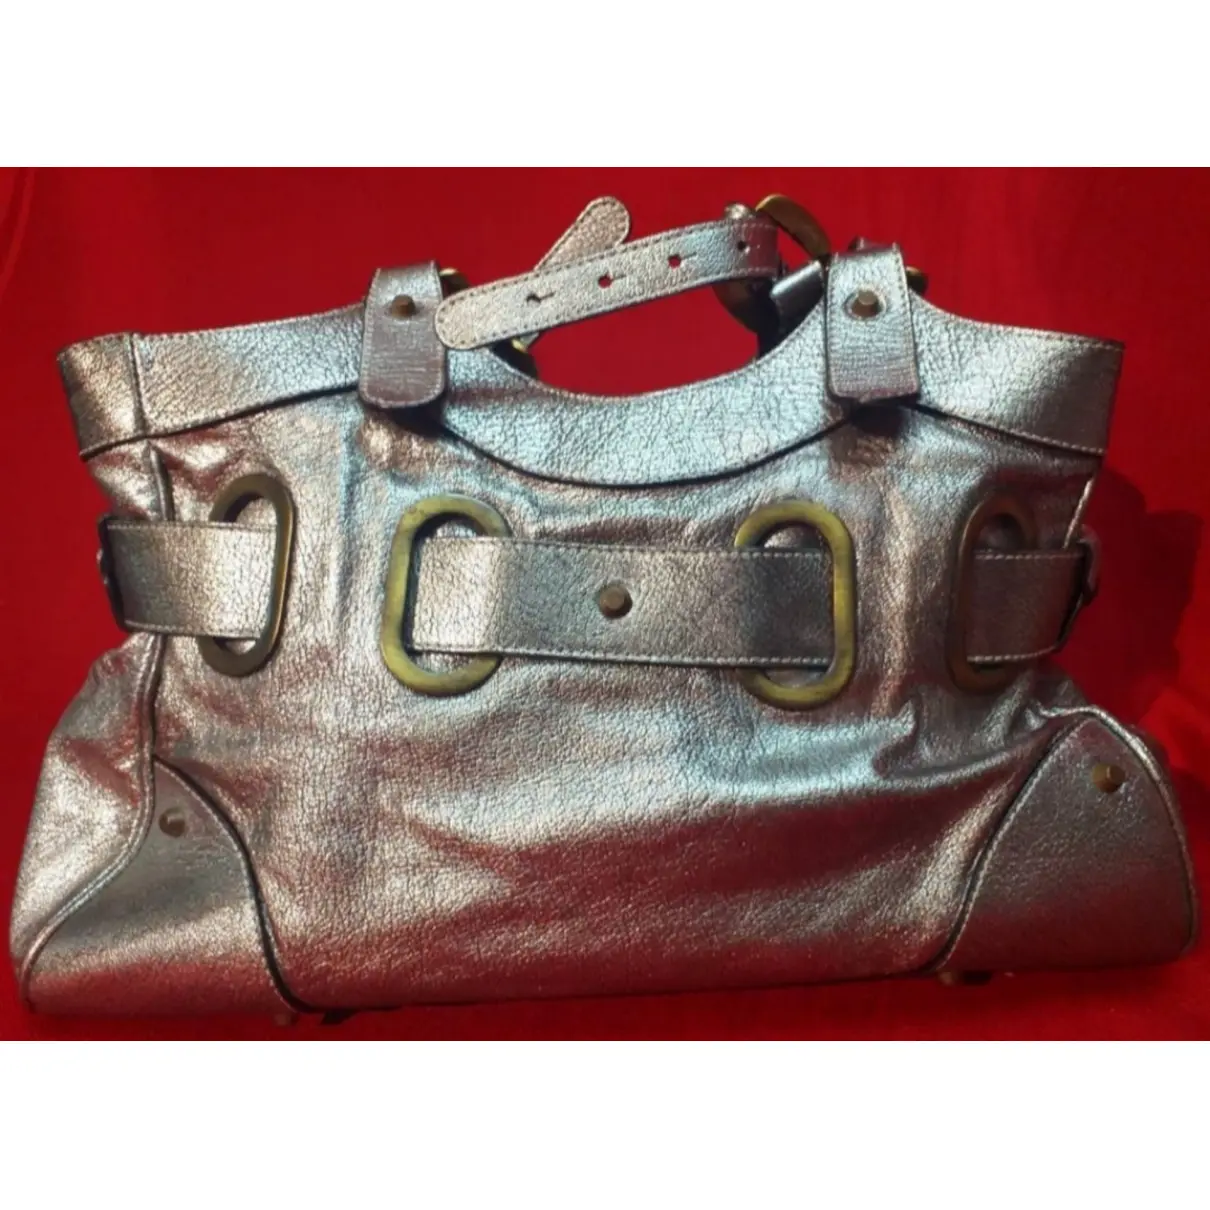 Buy Barbara Bui Leather handbag online